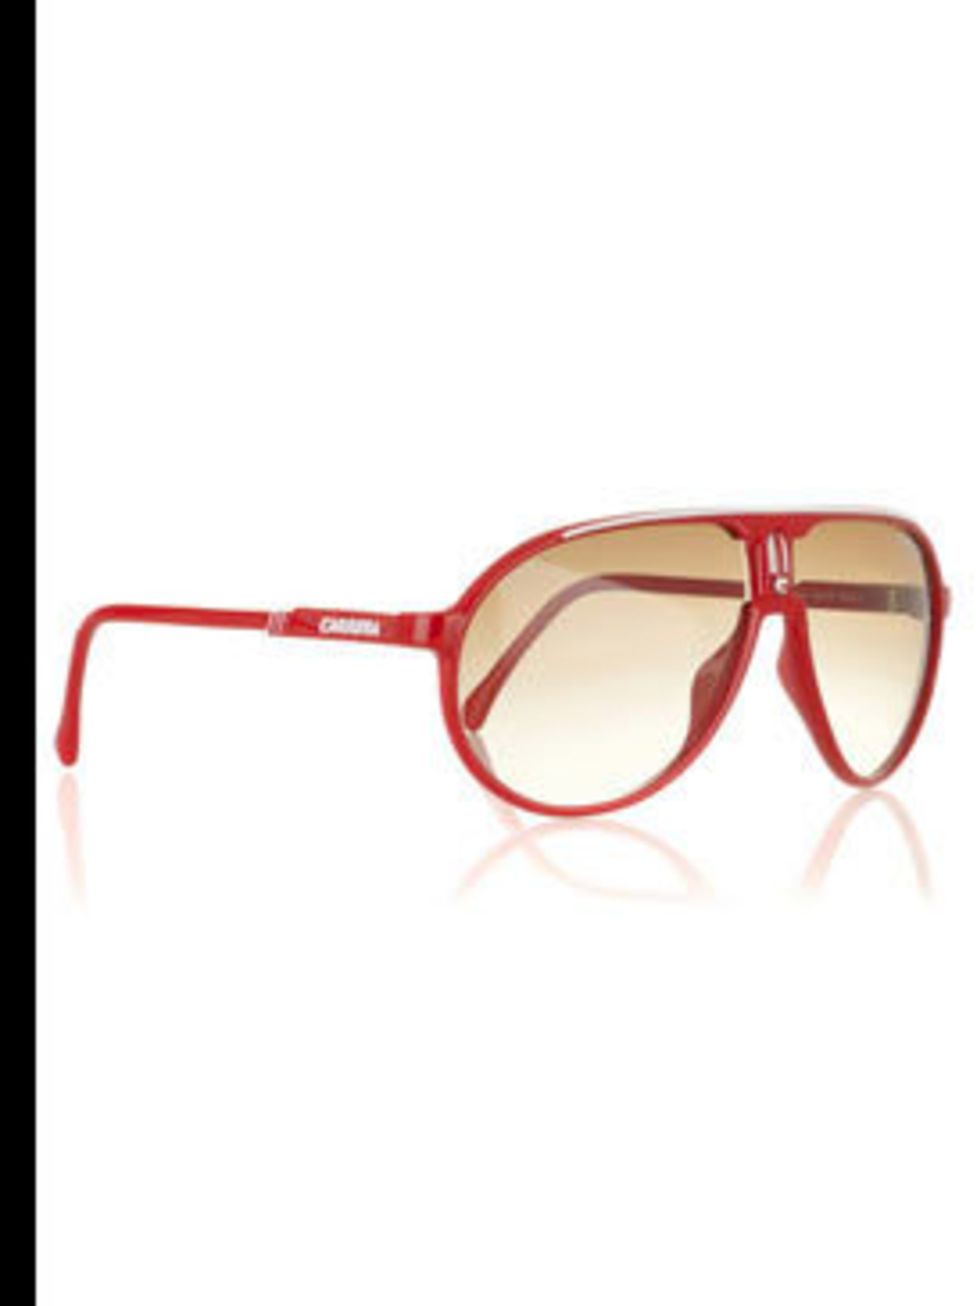 <p>Aviator sunglasses, £80 by Carrera at <a href="http://www.net-a-porter.com/product/49048">Net-a-Porter</a></p>